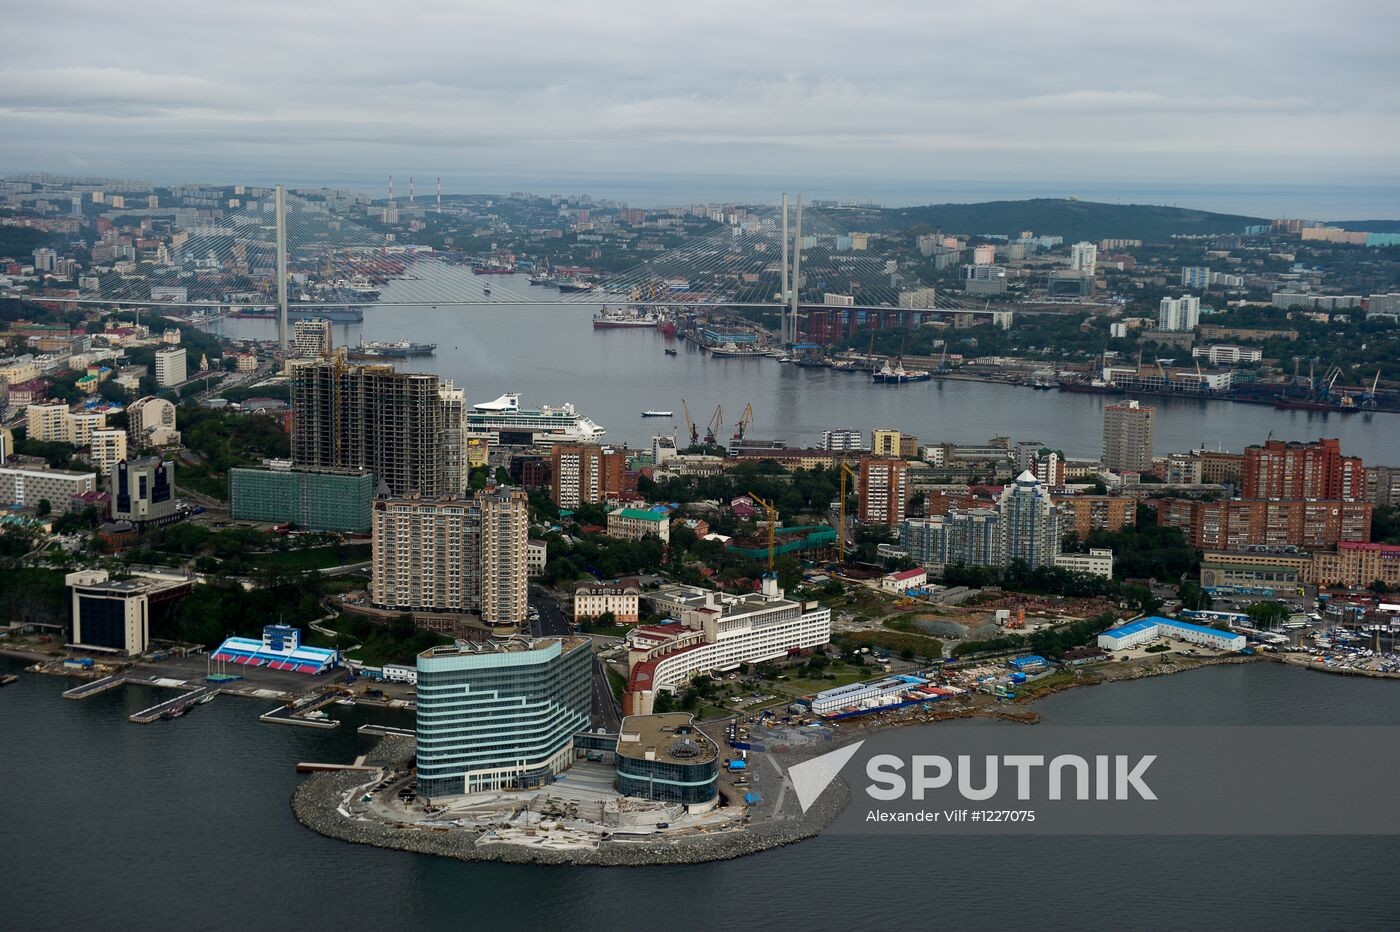 Vladivostok and Russky Island